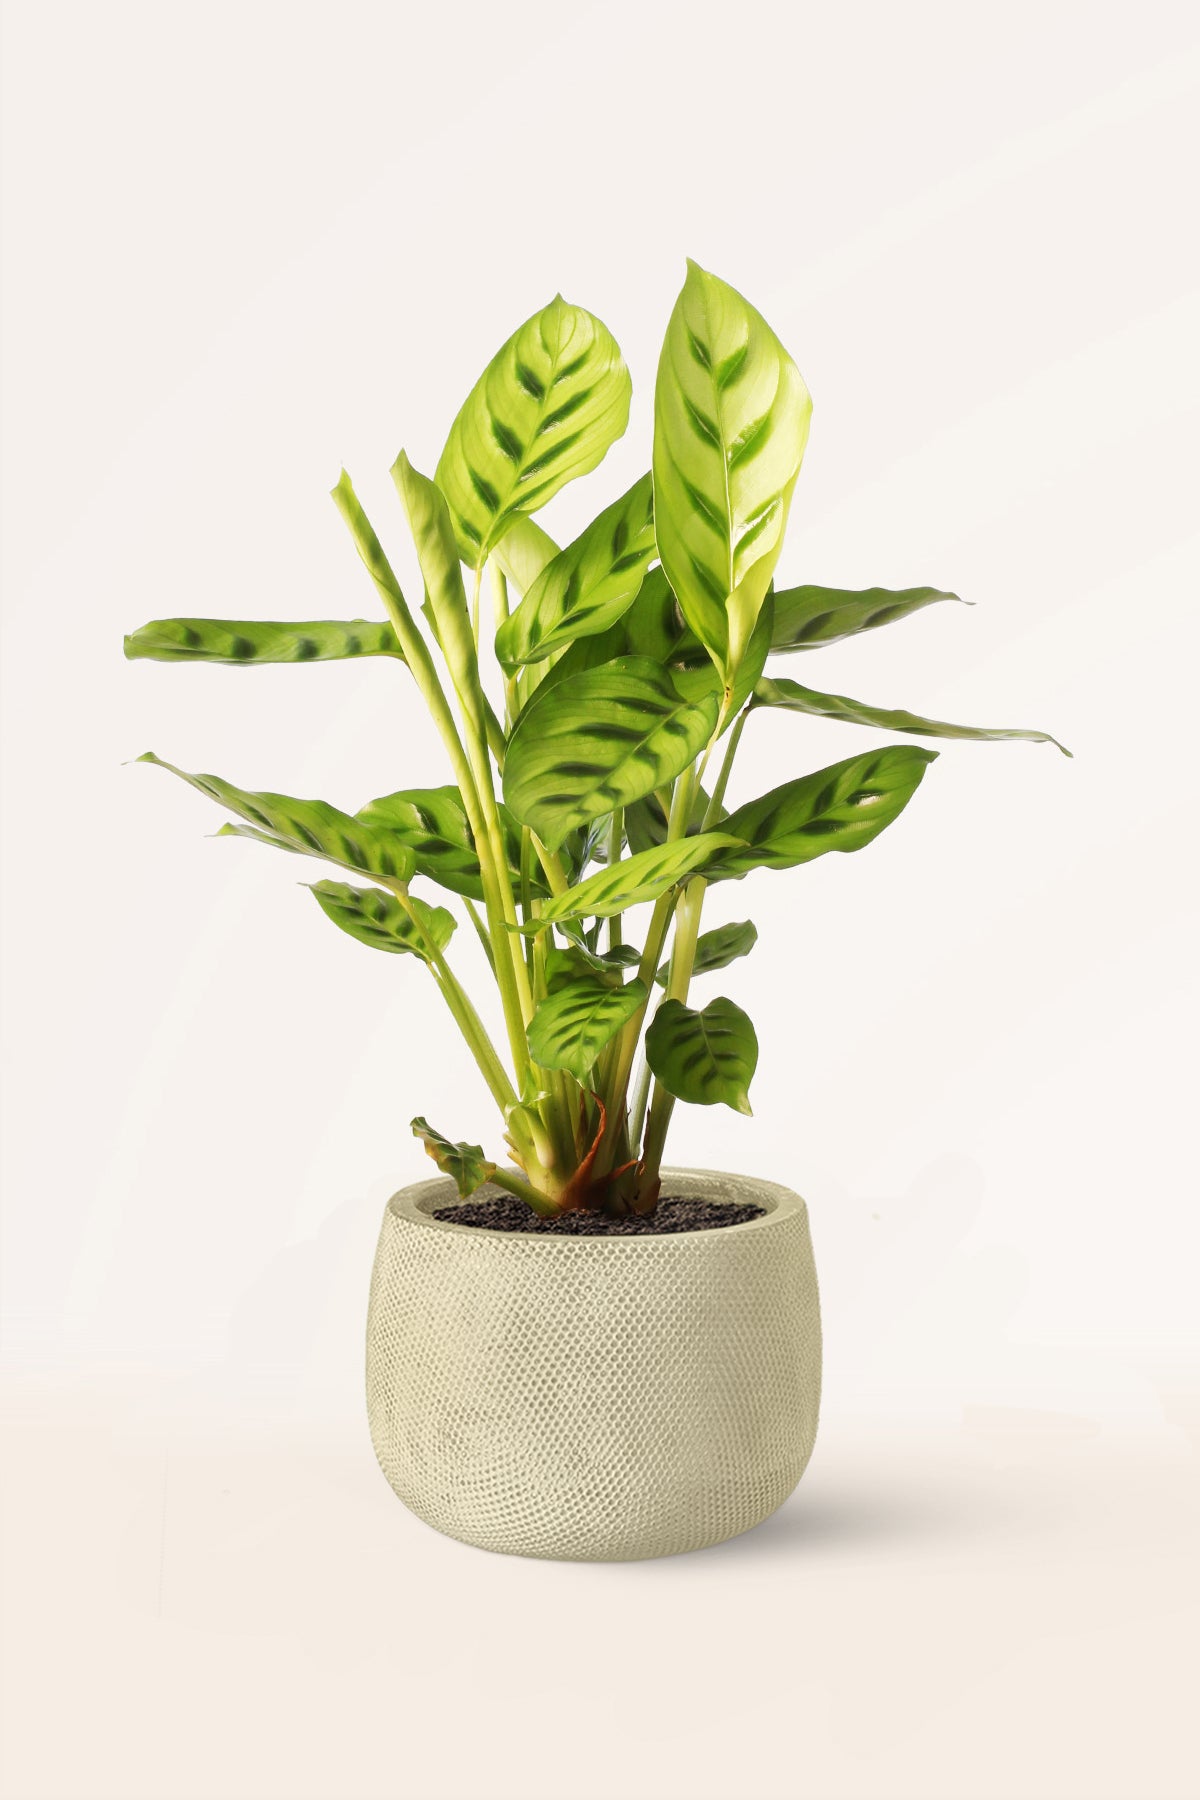 Calathea Leopardina | Comprar plantas online | Plantas de interior |  APRILPLANTS